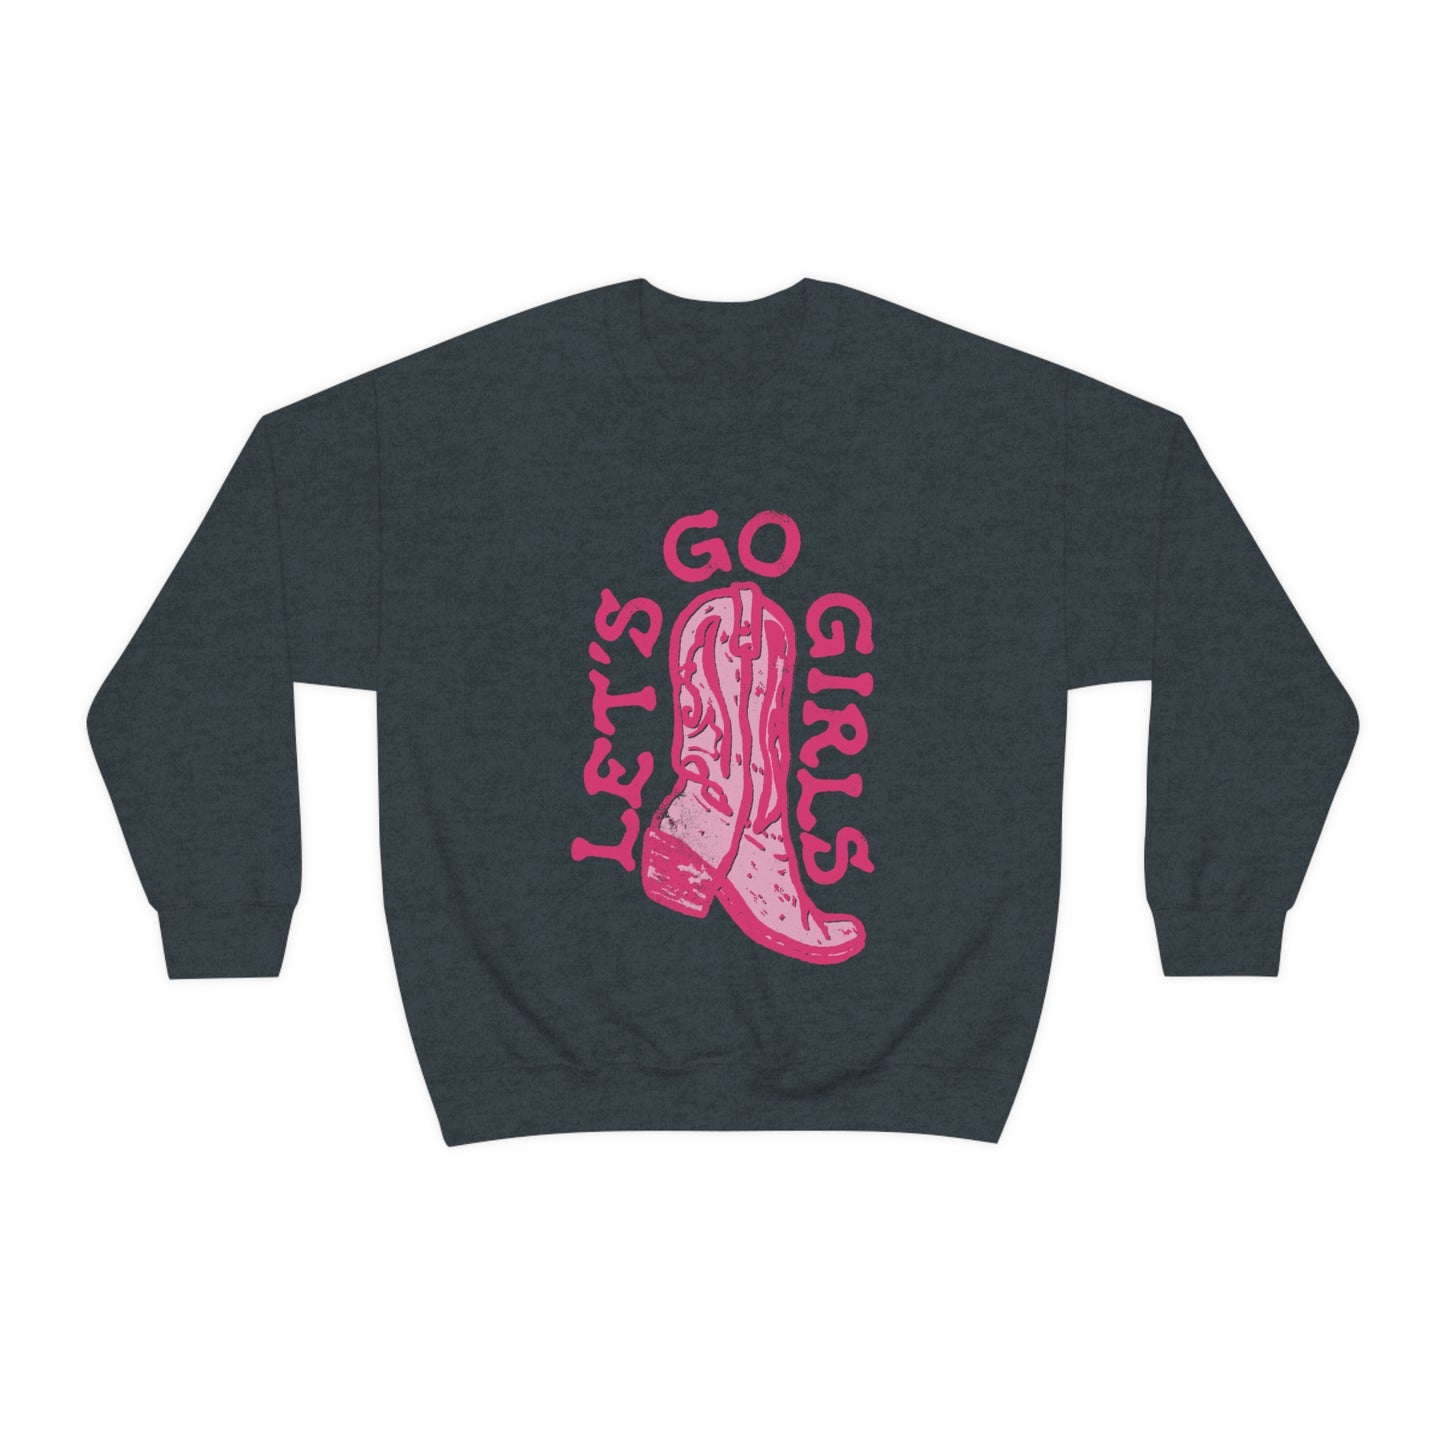 Lets Go Girls Cowboy Boots Sweatshirt